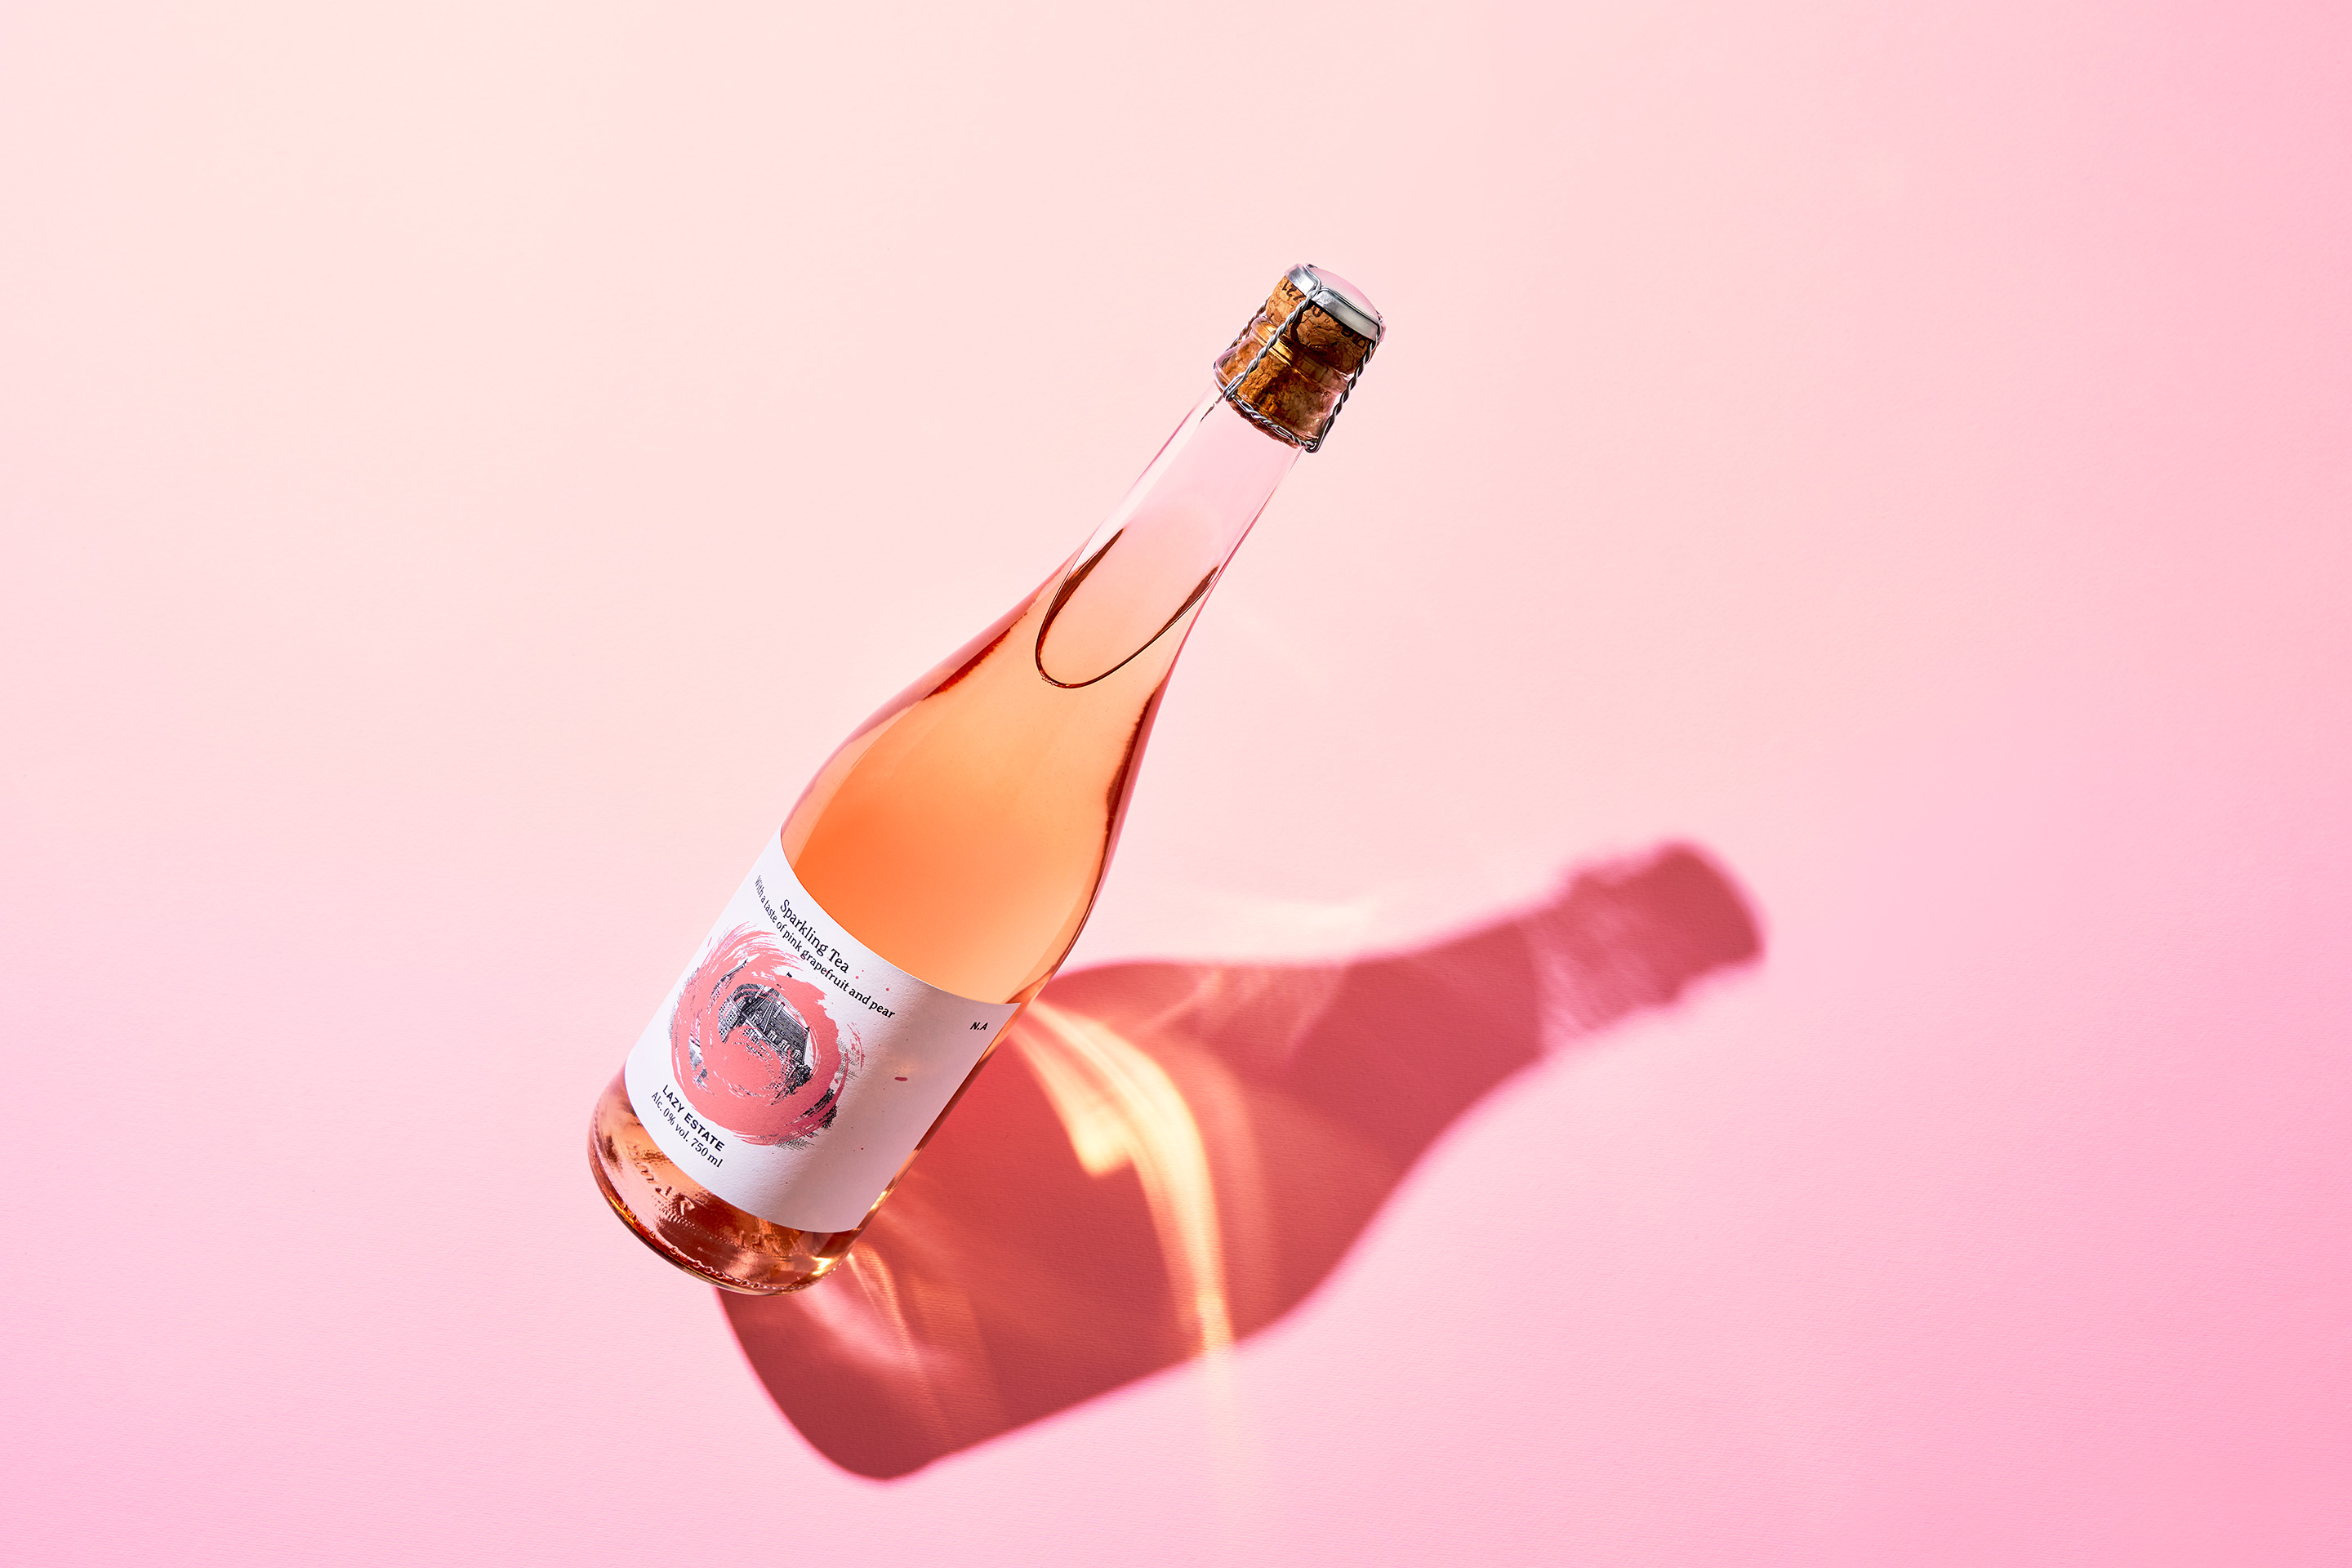 Neumeister packaging design bottle Sparkling Tea Pink Grapefruit & Pear Alcohol Free